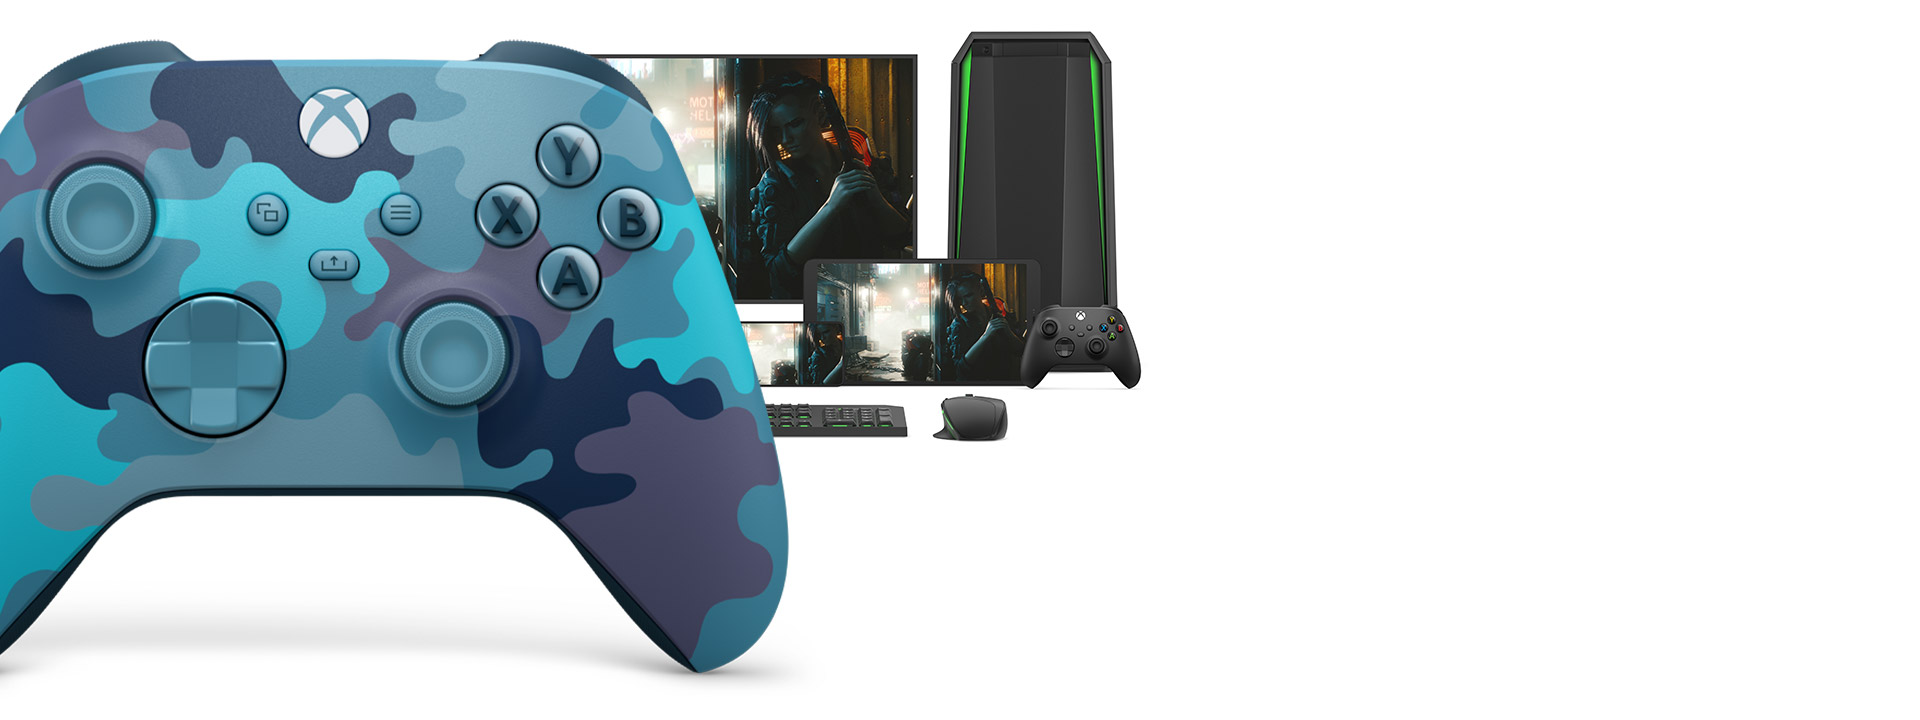 Xbox draadloze controller - Mineral Camo Special Edition voor een computer, monitor, tablet, telefoon, xbox draadloze controller, muis en toetsenbord